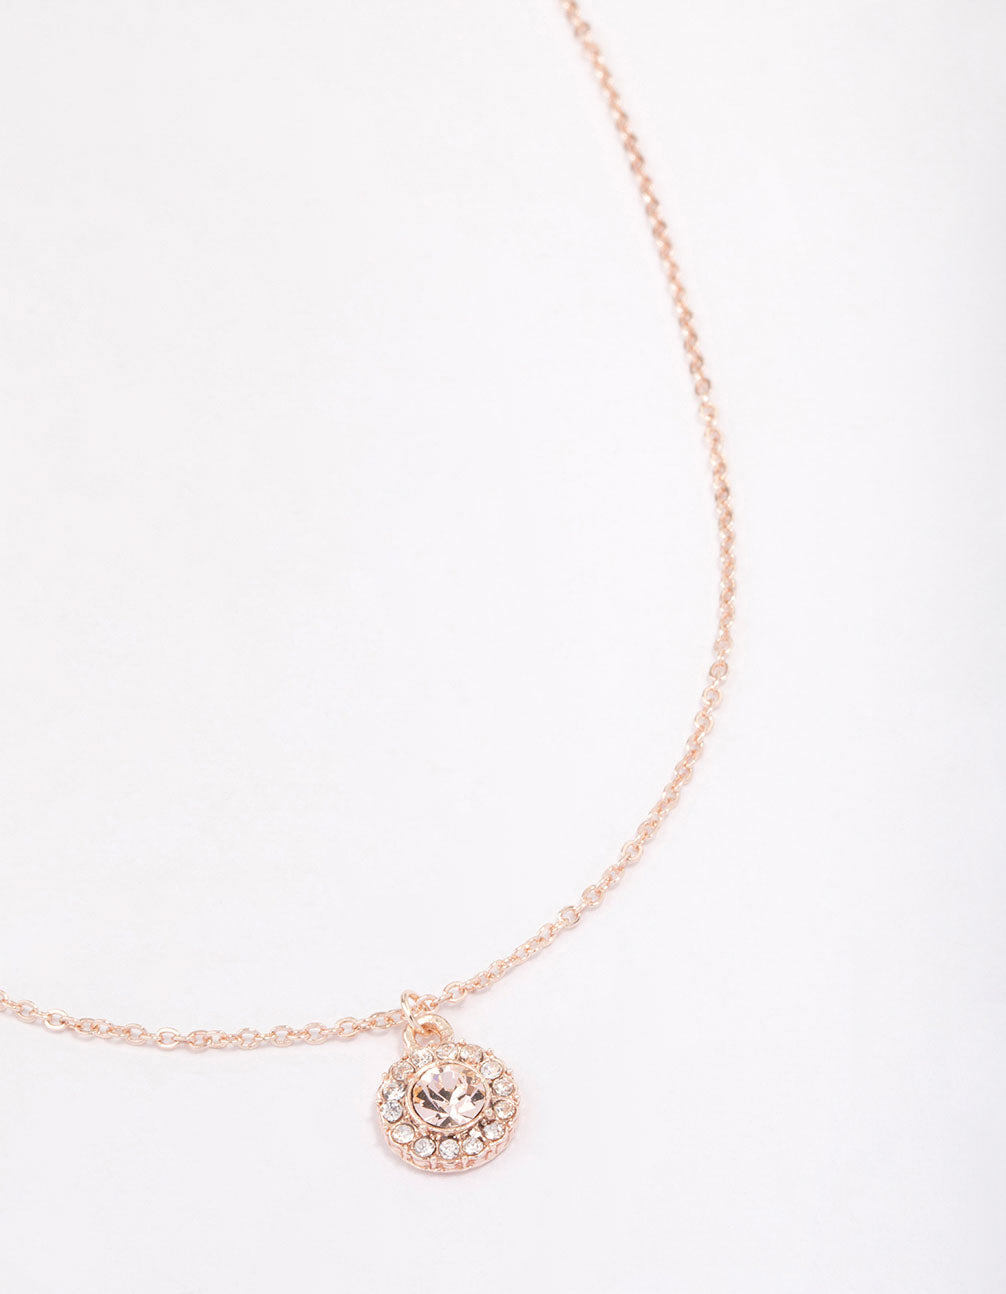 Necklace - Rose Gold - Box Chain Cz Concentric Circle Pendant | Gujjadi  Swarna Jewellers